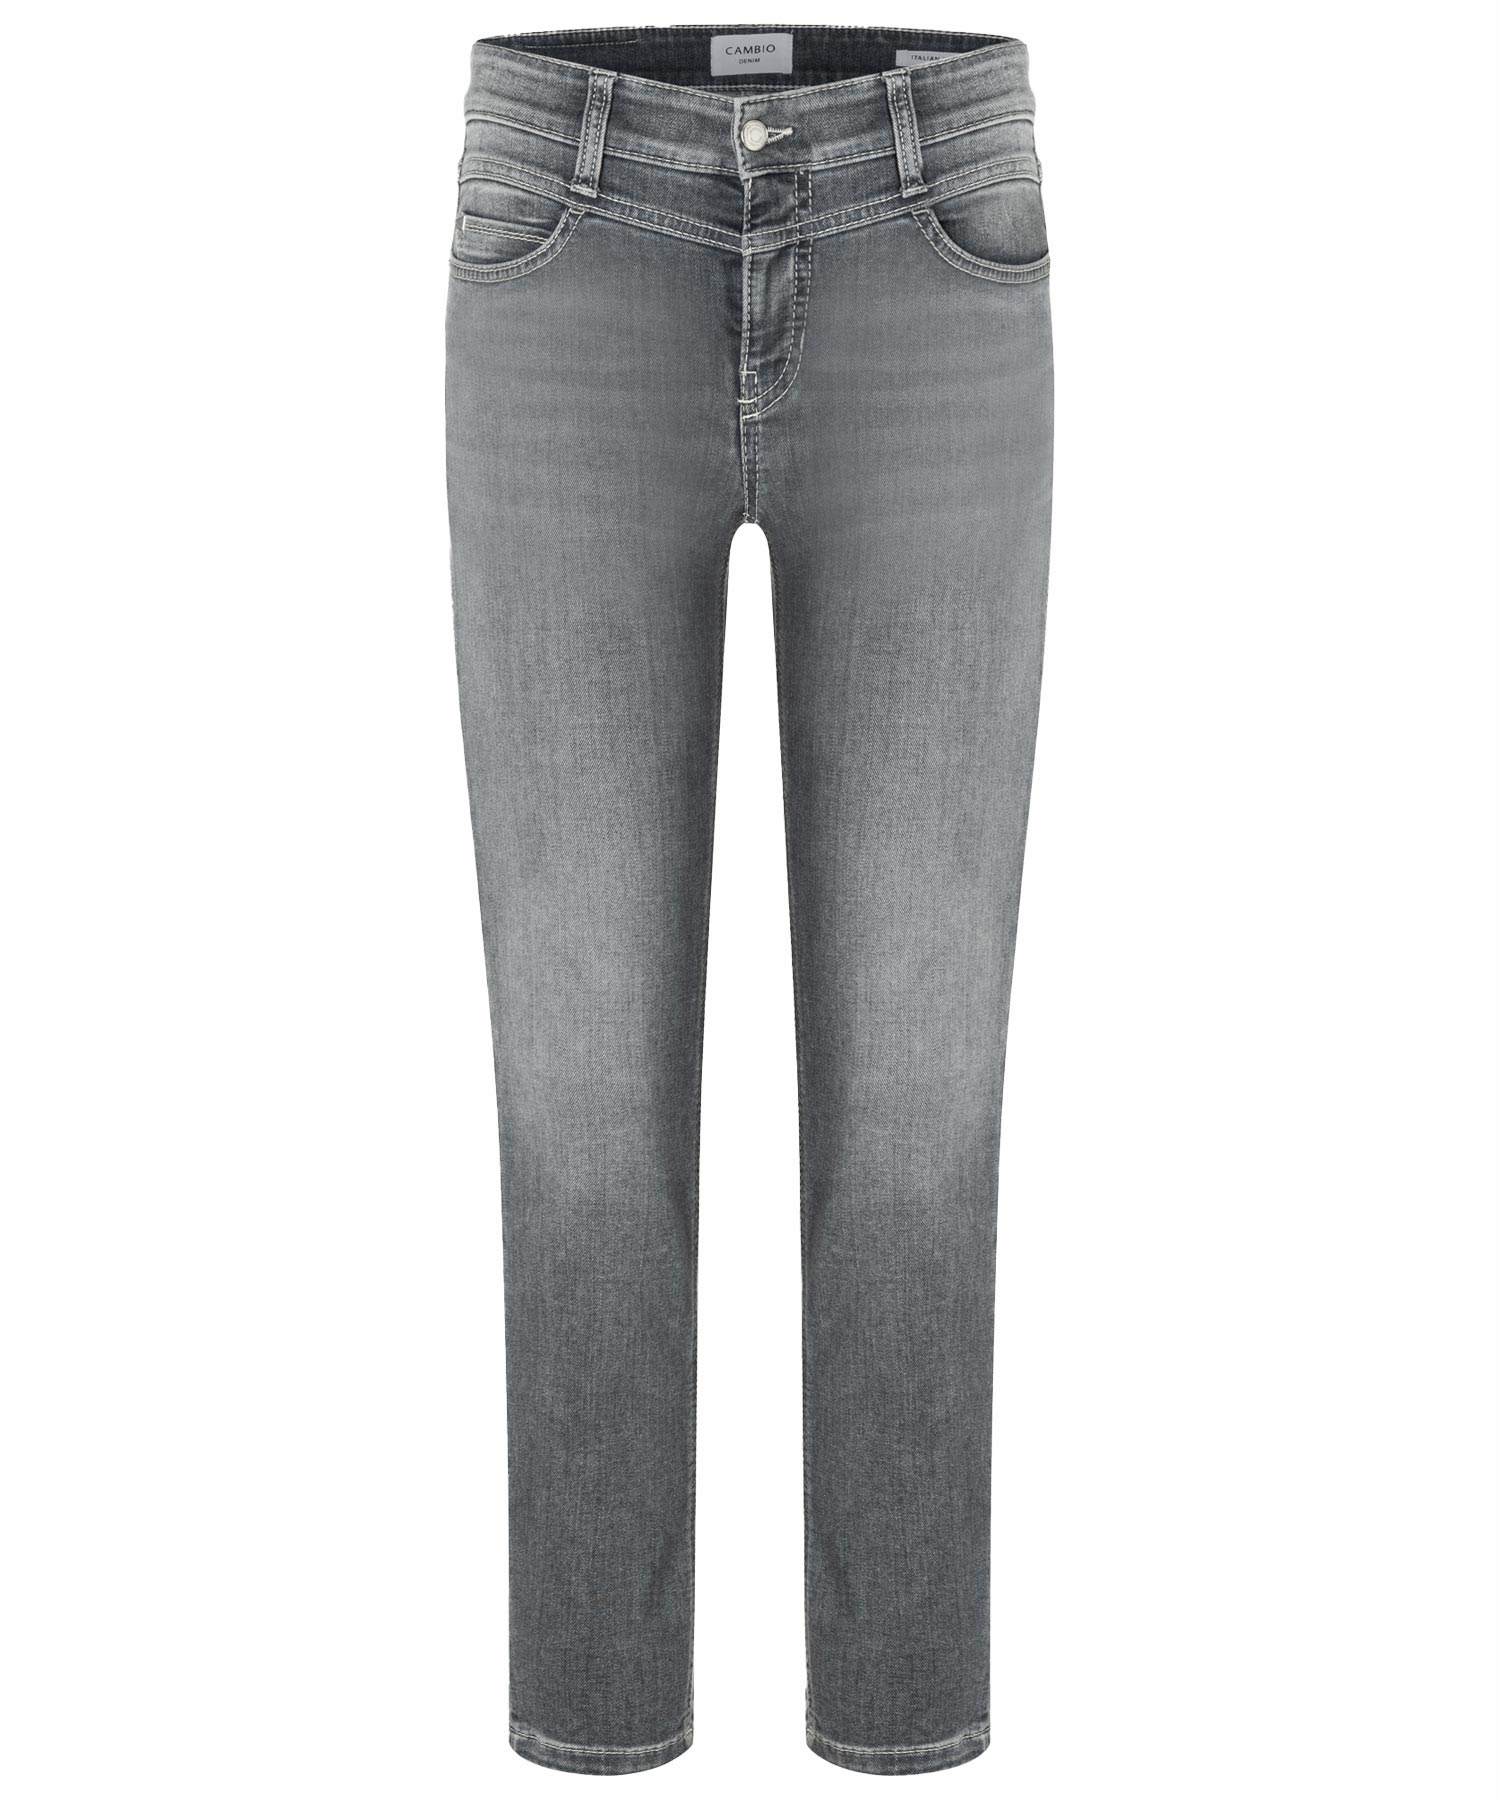 Cambio Jeans Posh in grey